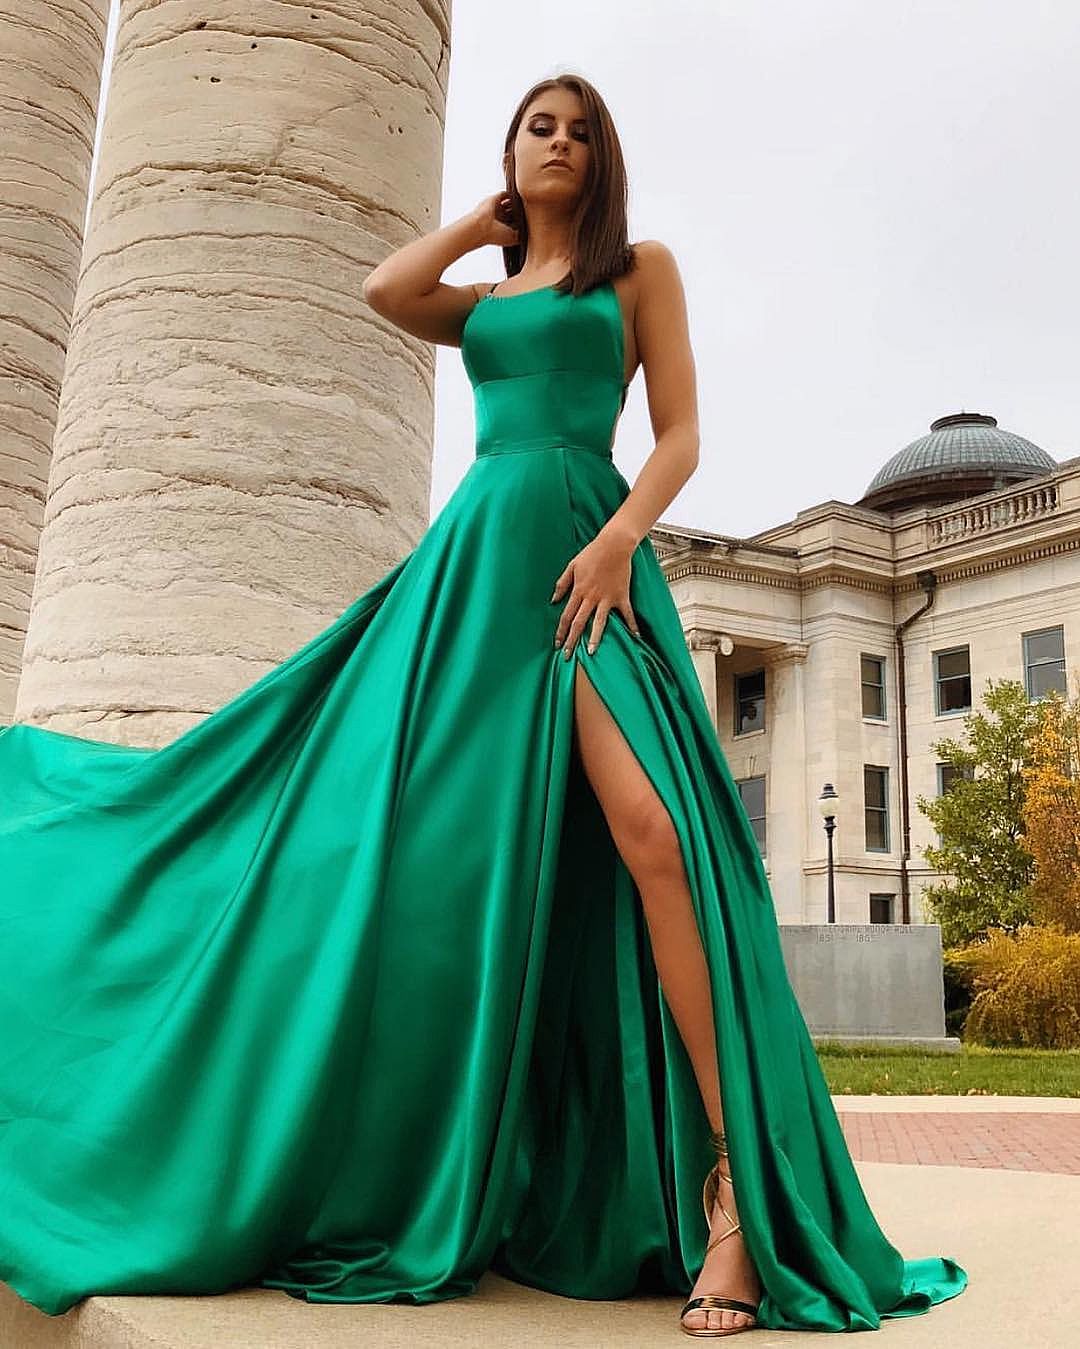 Stunning gown